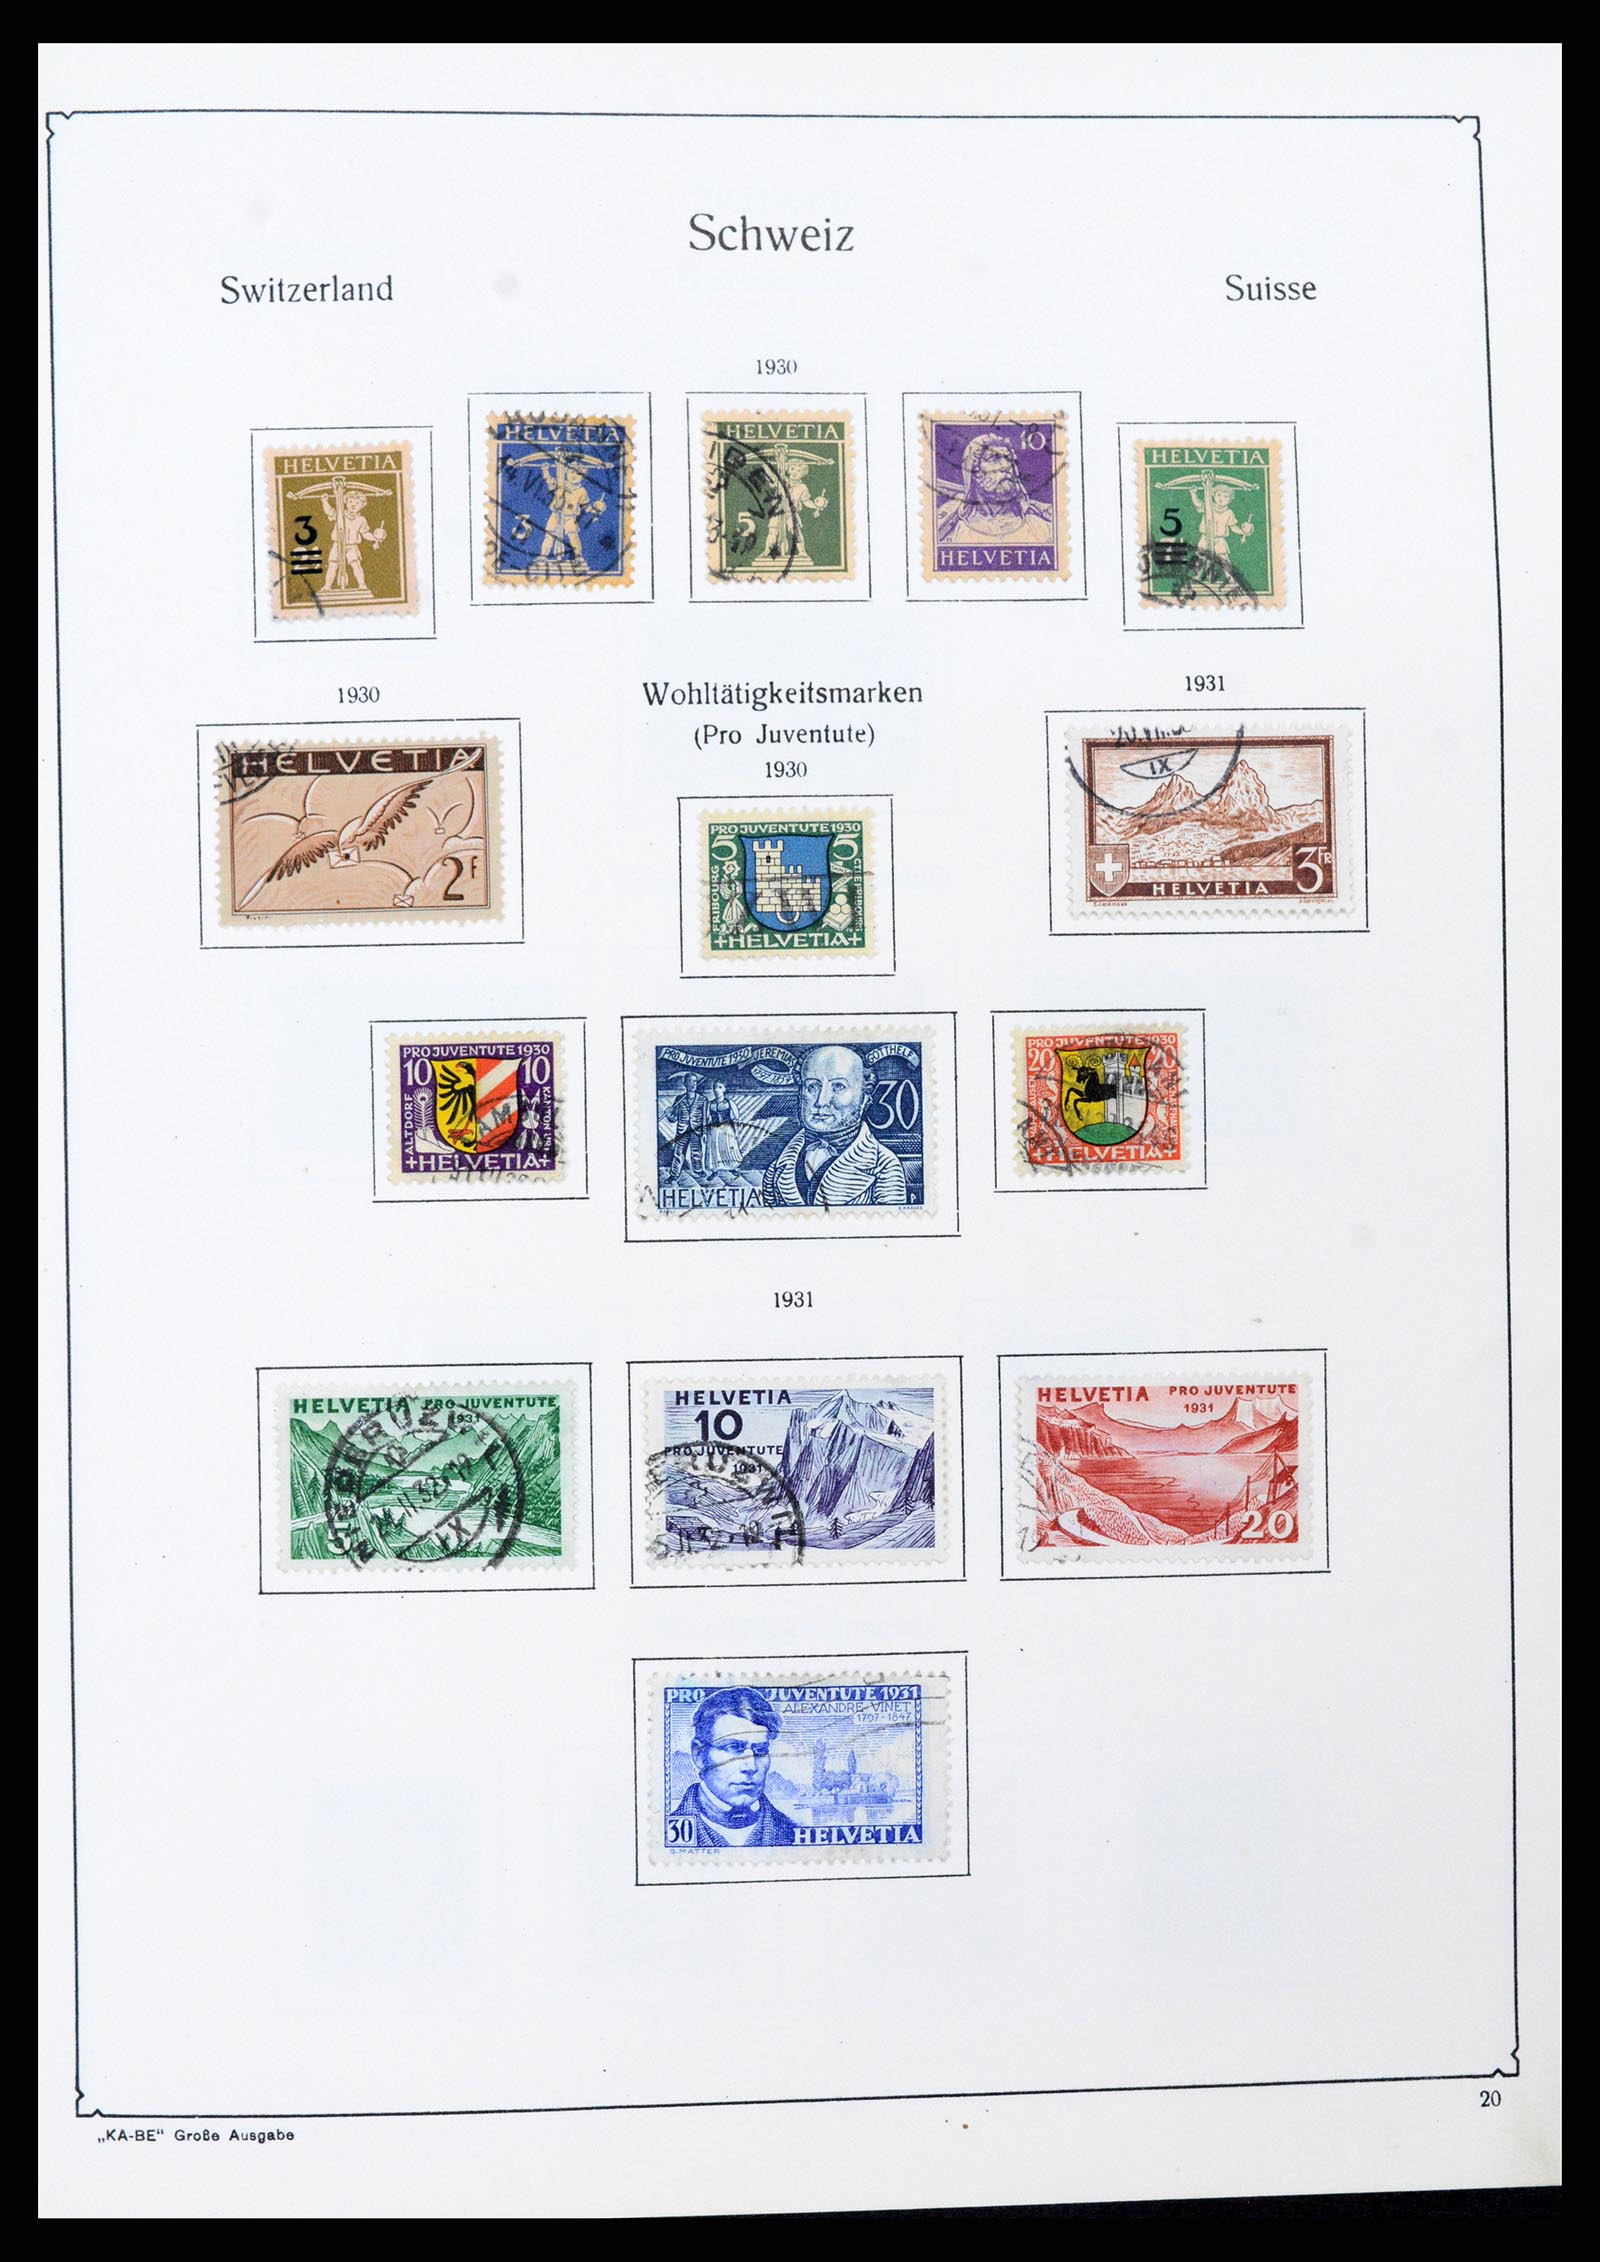 37588 019 - Stamp collection 37588 Switzerland 1854-1974.